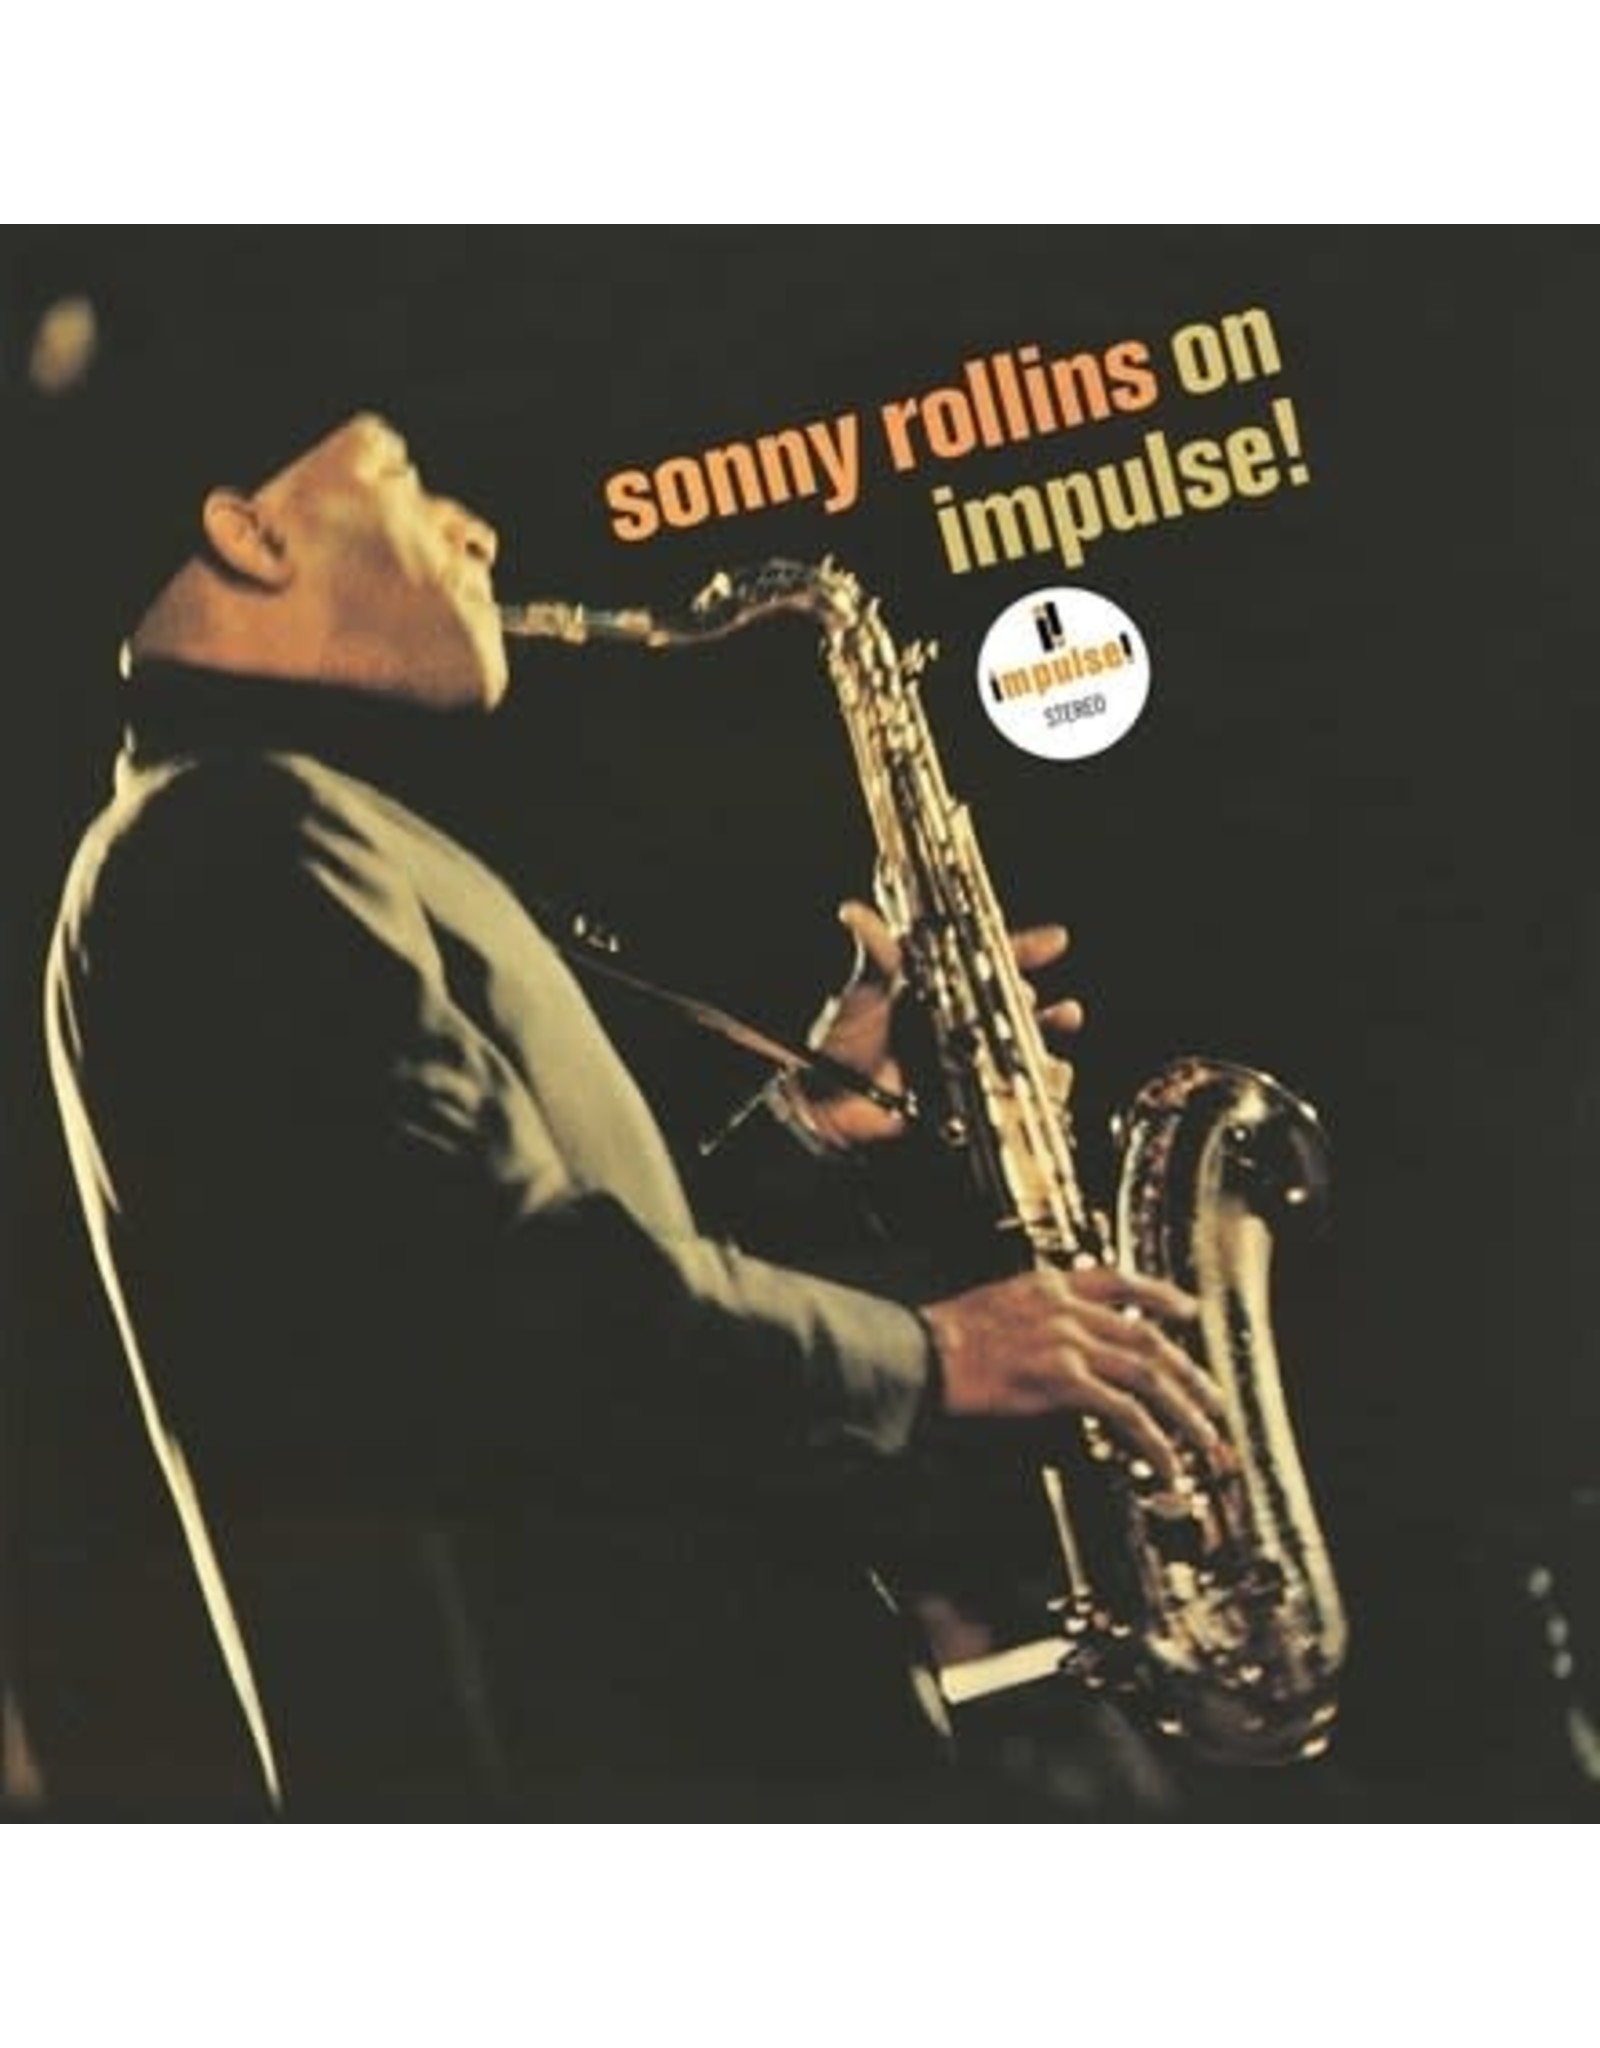 Impulse Rollins, Sonny: Sonny Rollins - On Impulse! LP